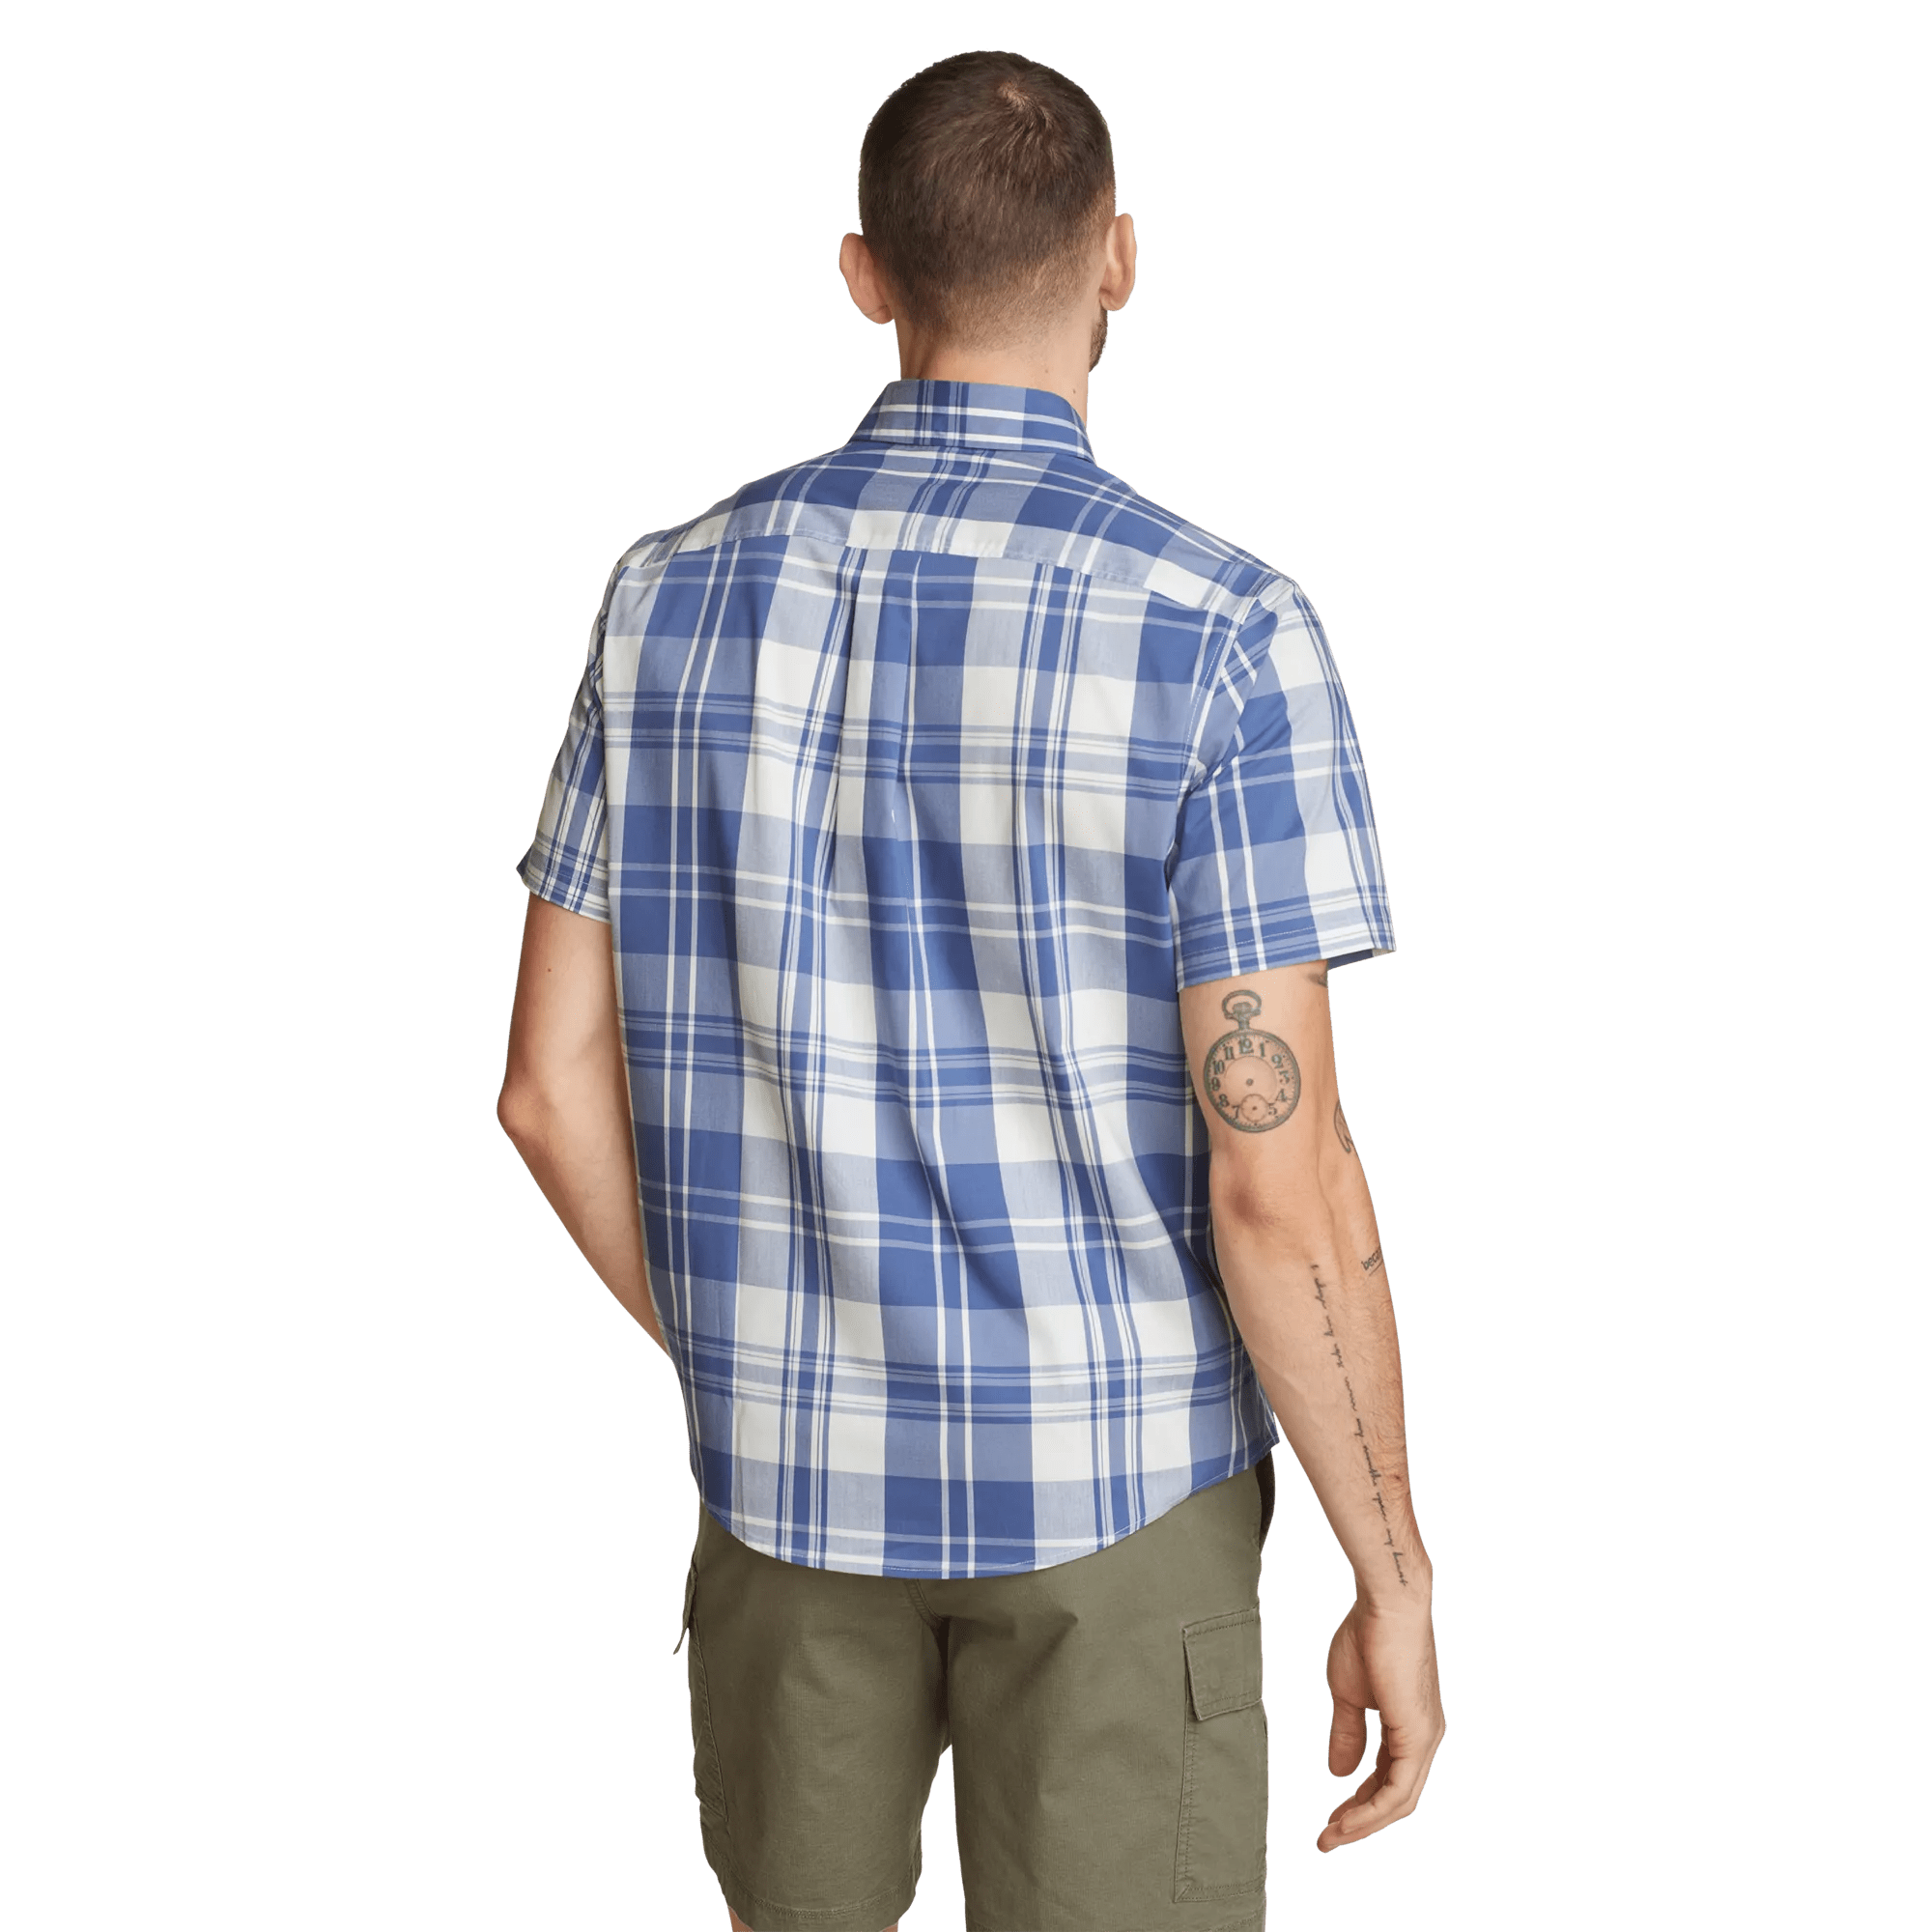 Voyager Flex Short-Sleeve Shirt